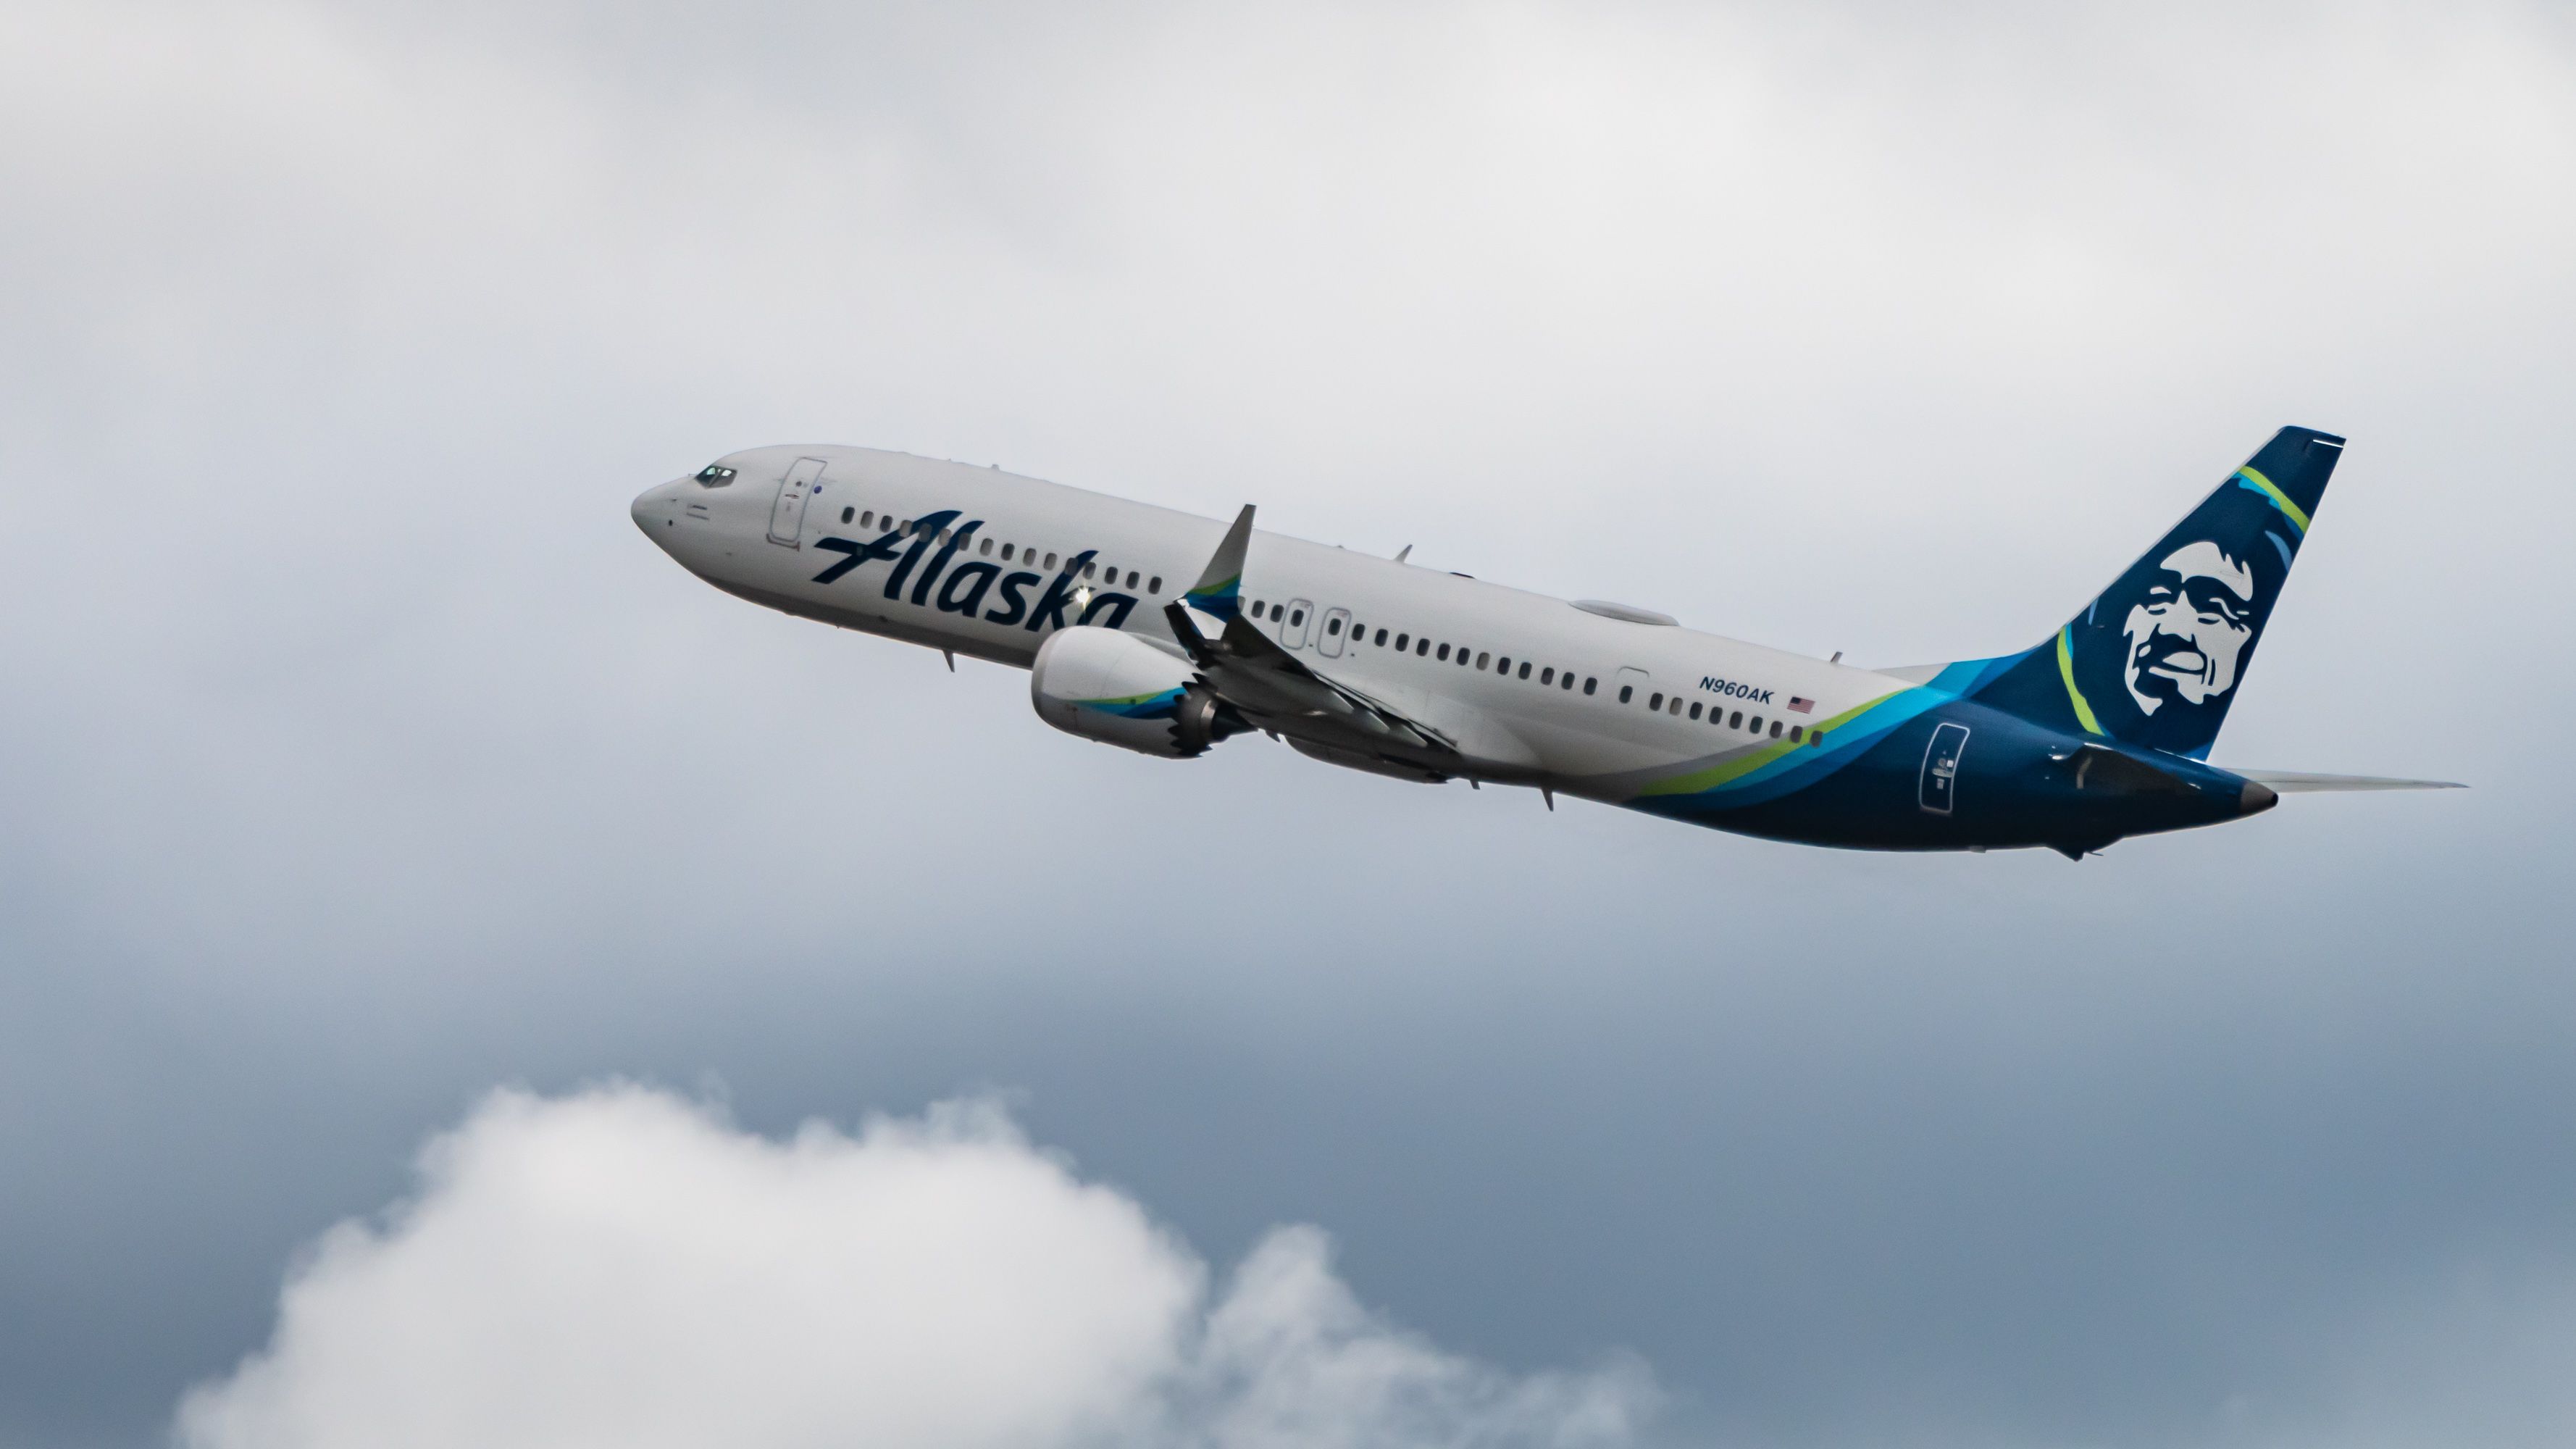 N960AK, An Alaska Airlines Boeing 737 MAX 9 Rising Over A Cloud